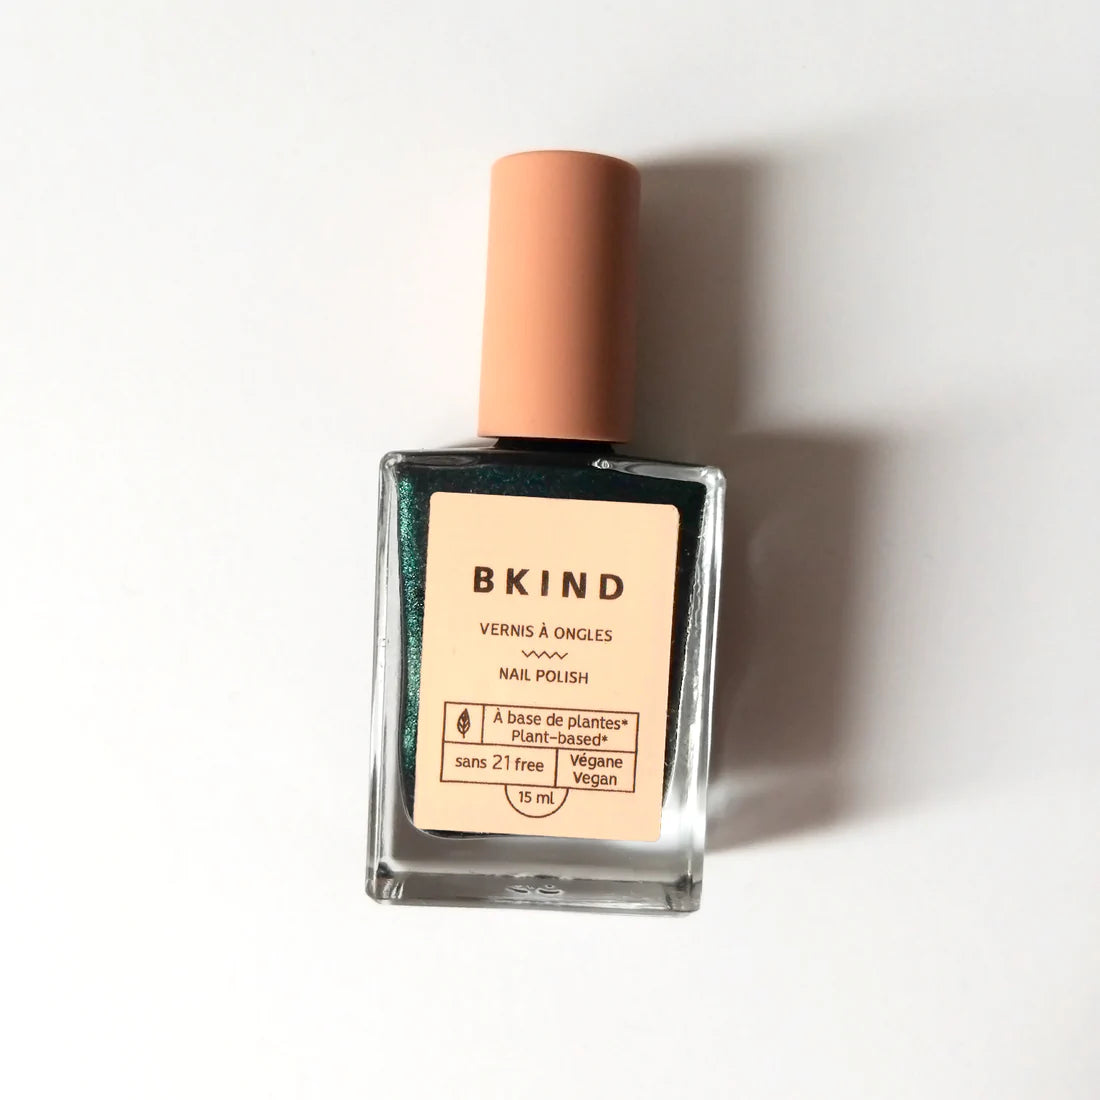 BKIND nail polish | WICKED